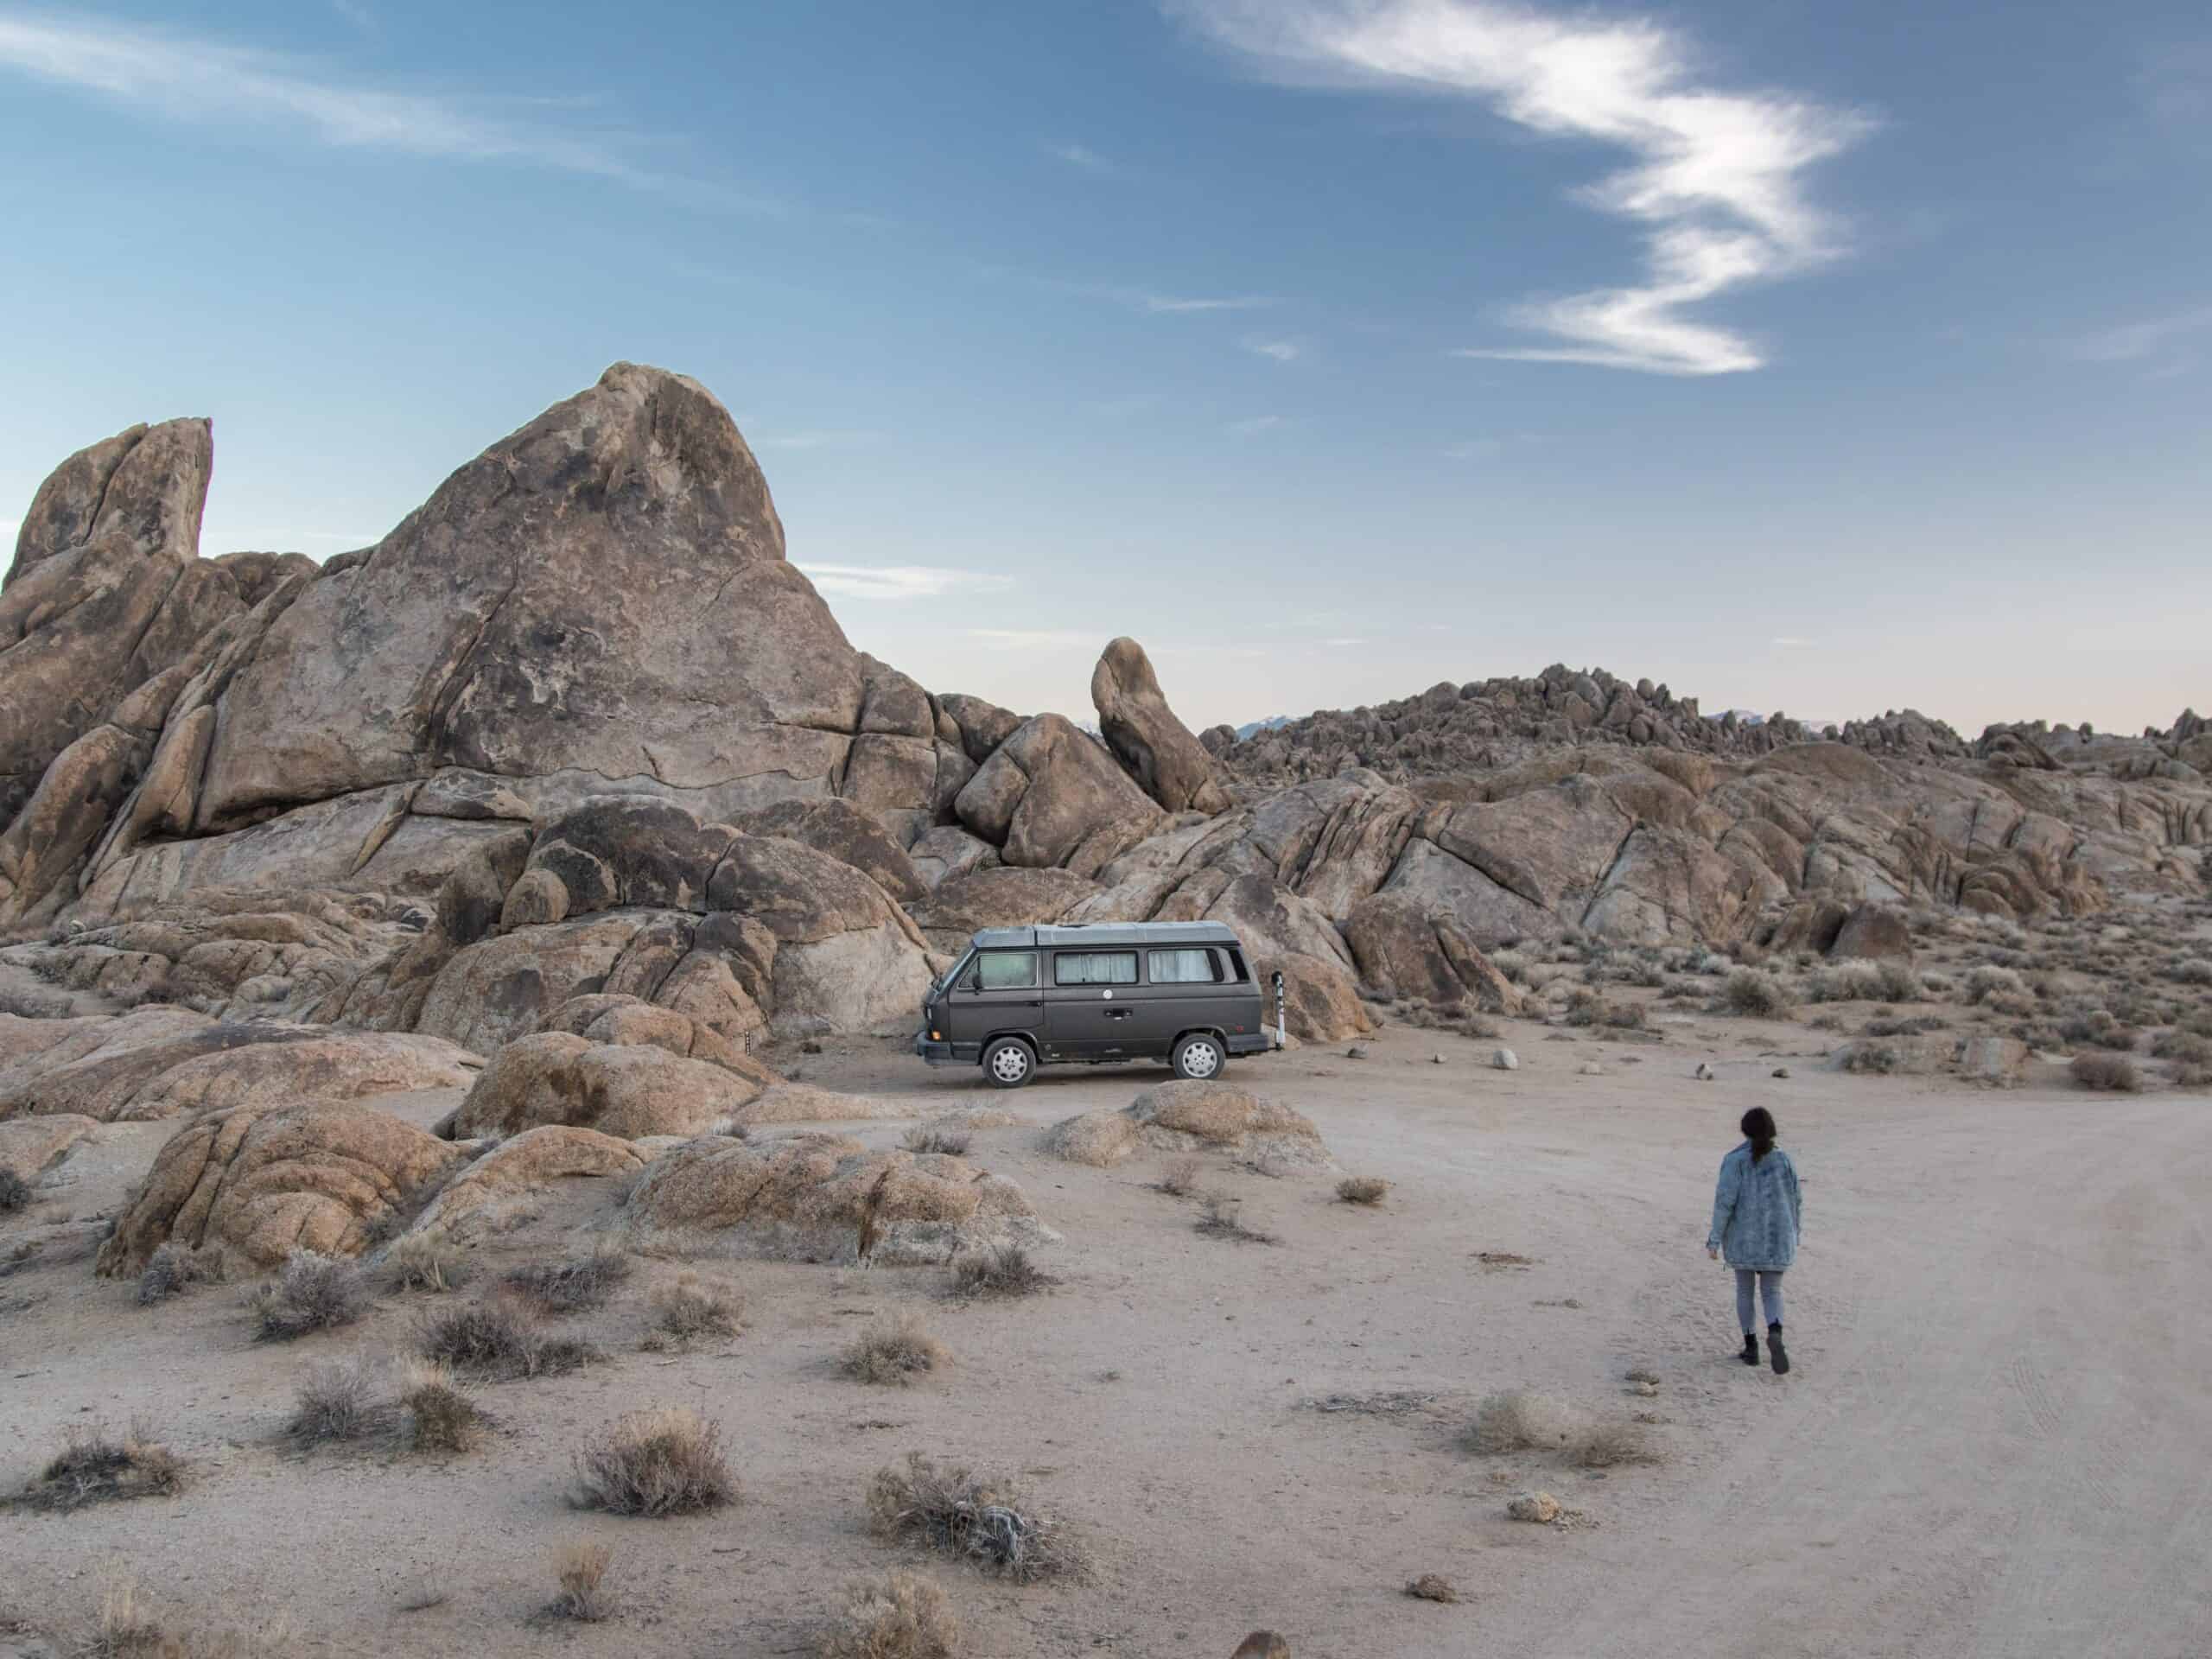 Van dry camping in the desert